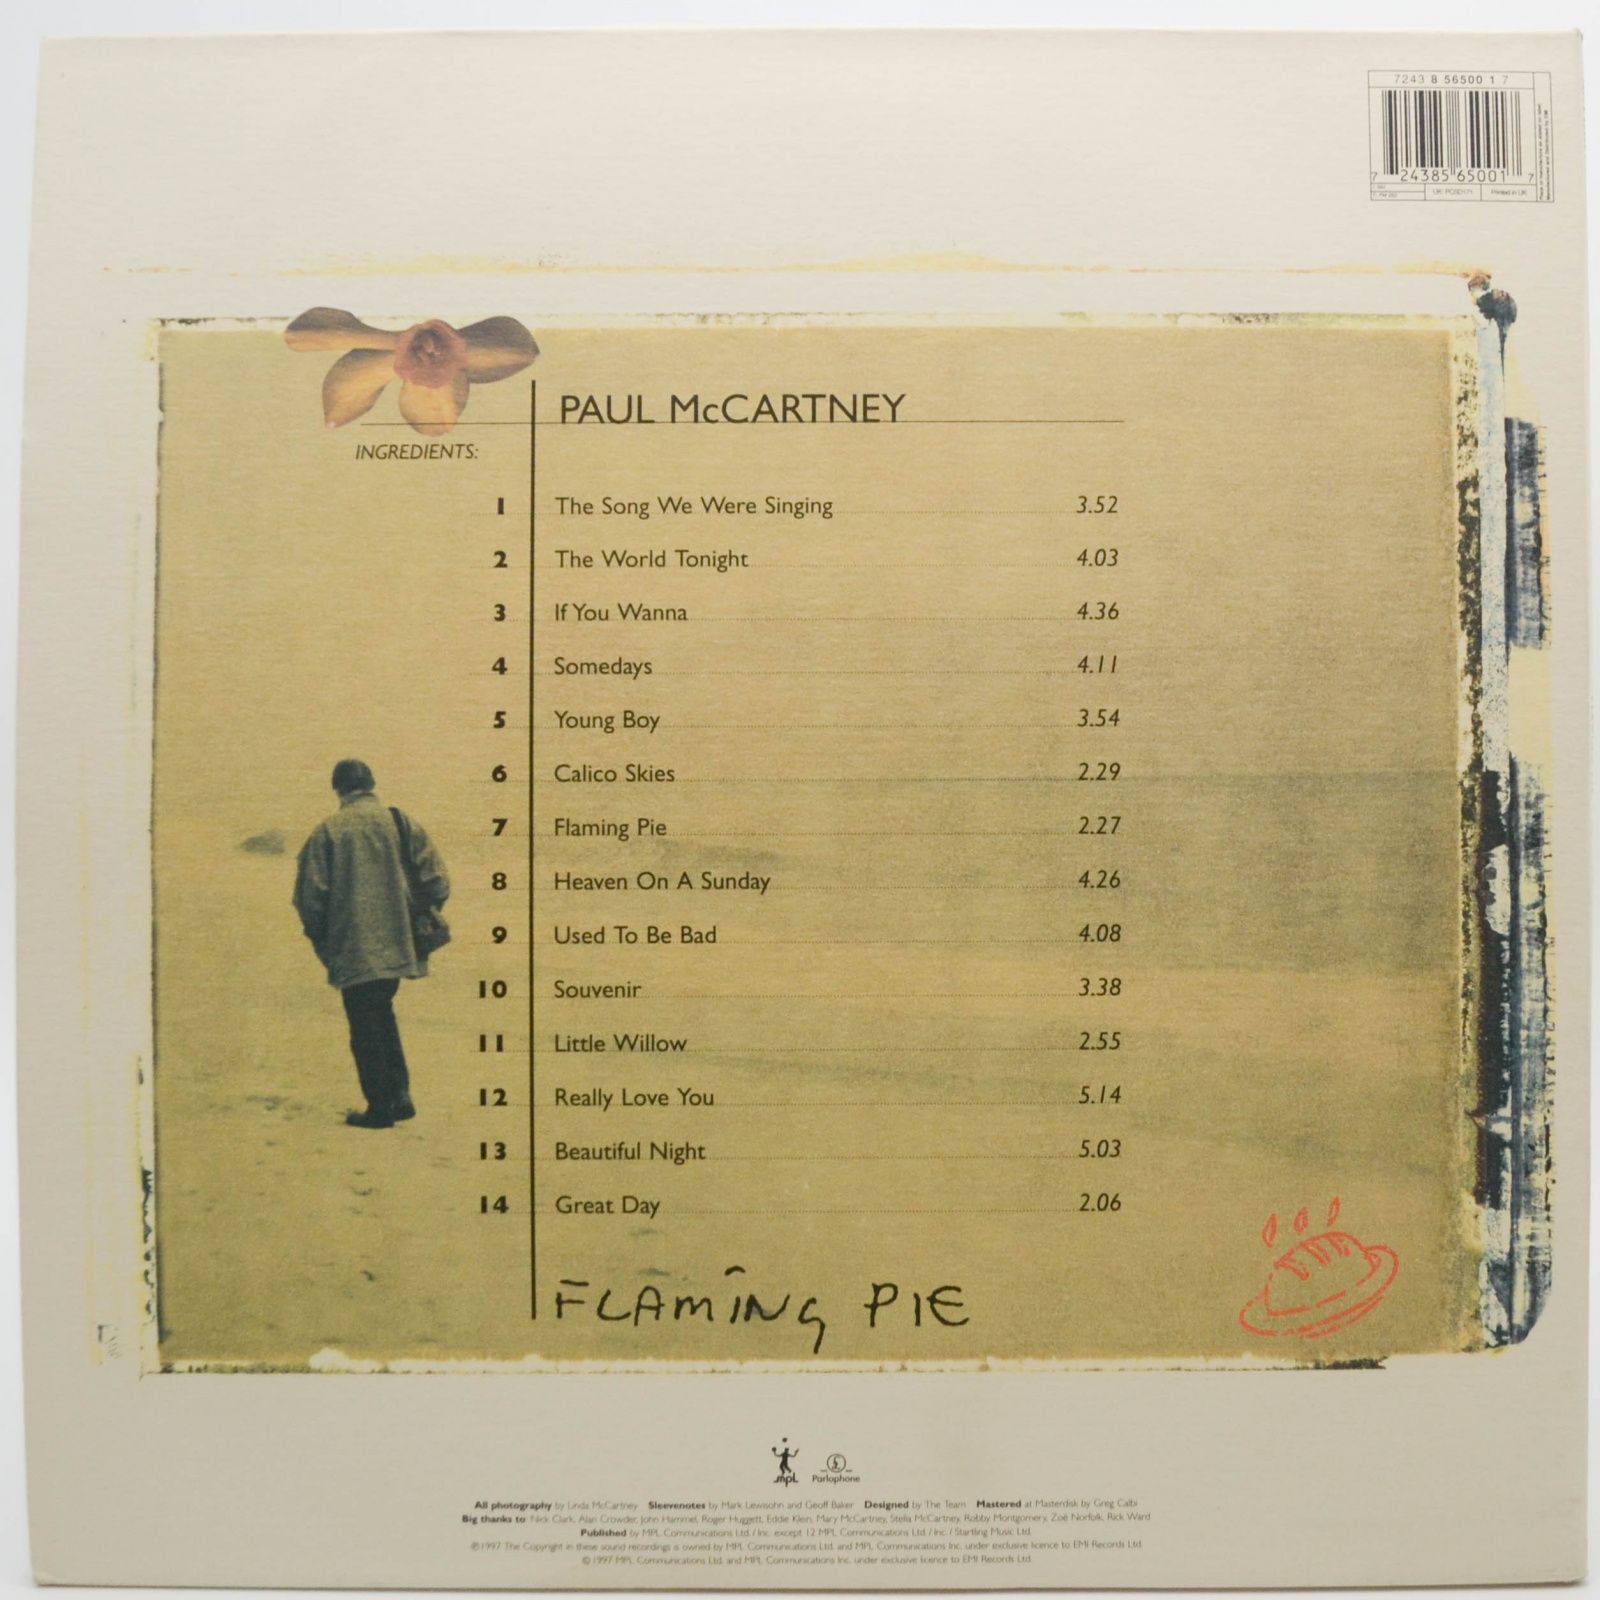 Paul McCartney — Flaming Pie (UK), 1997